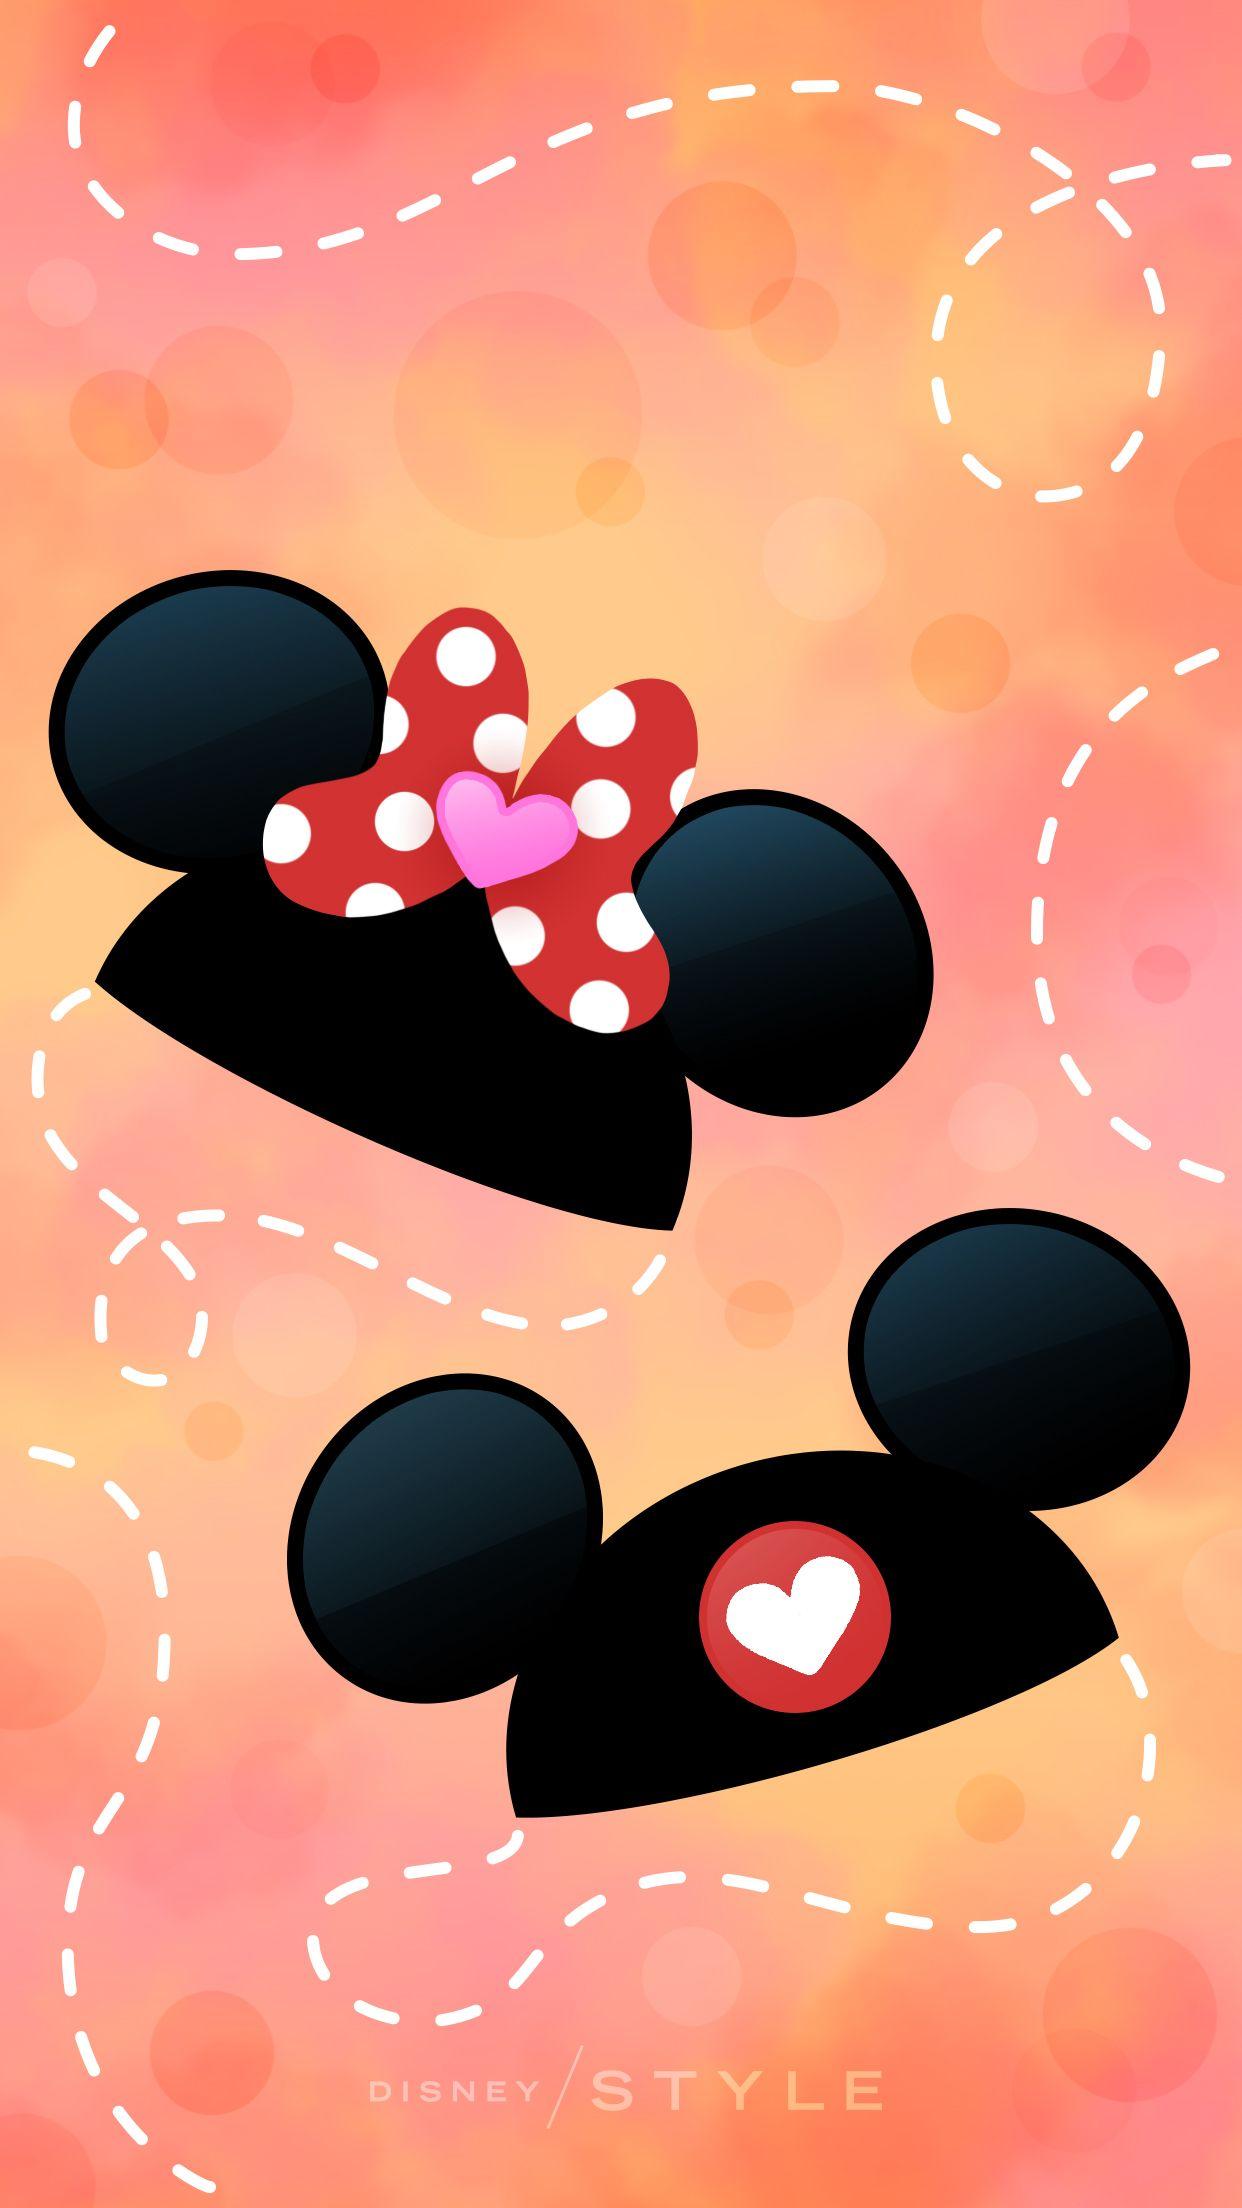 Disney News. Disney. Valentines wallpaper, Disney valentines, Valentines wallpaper iphone